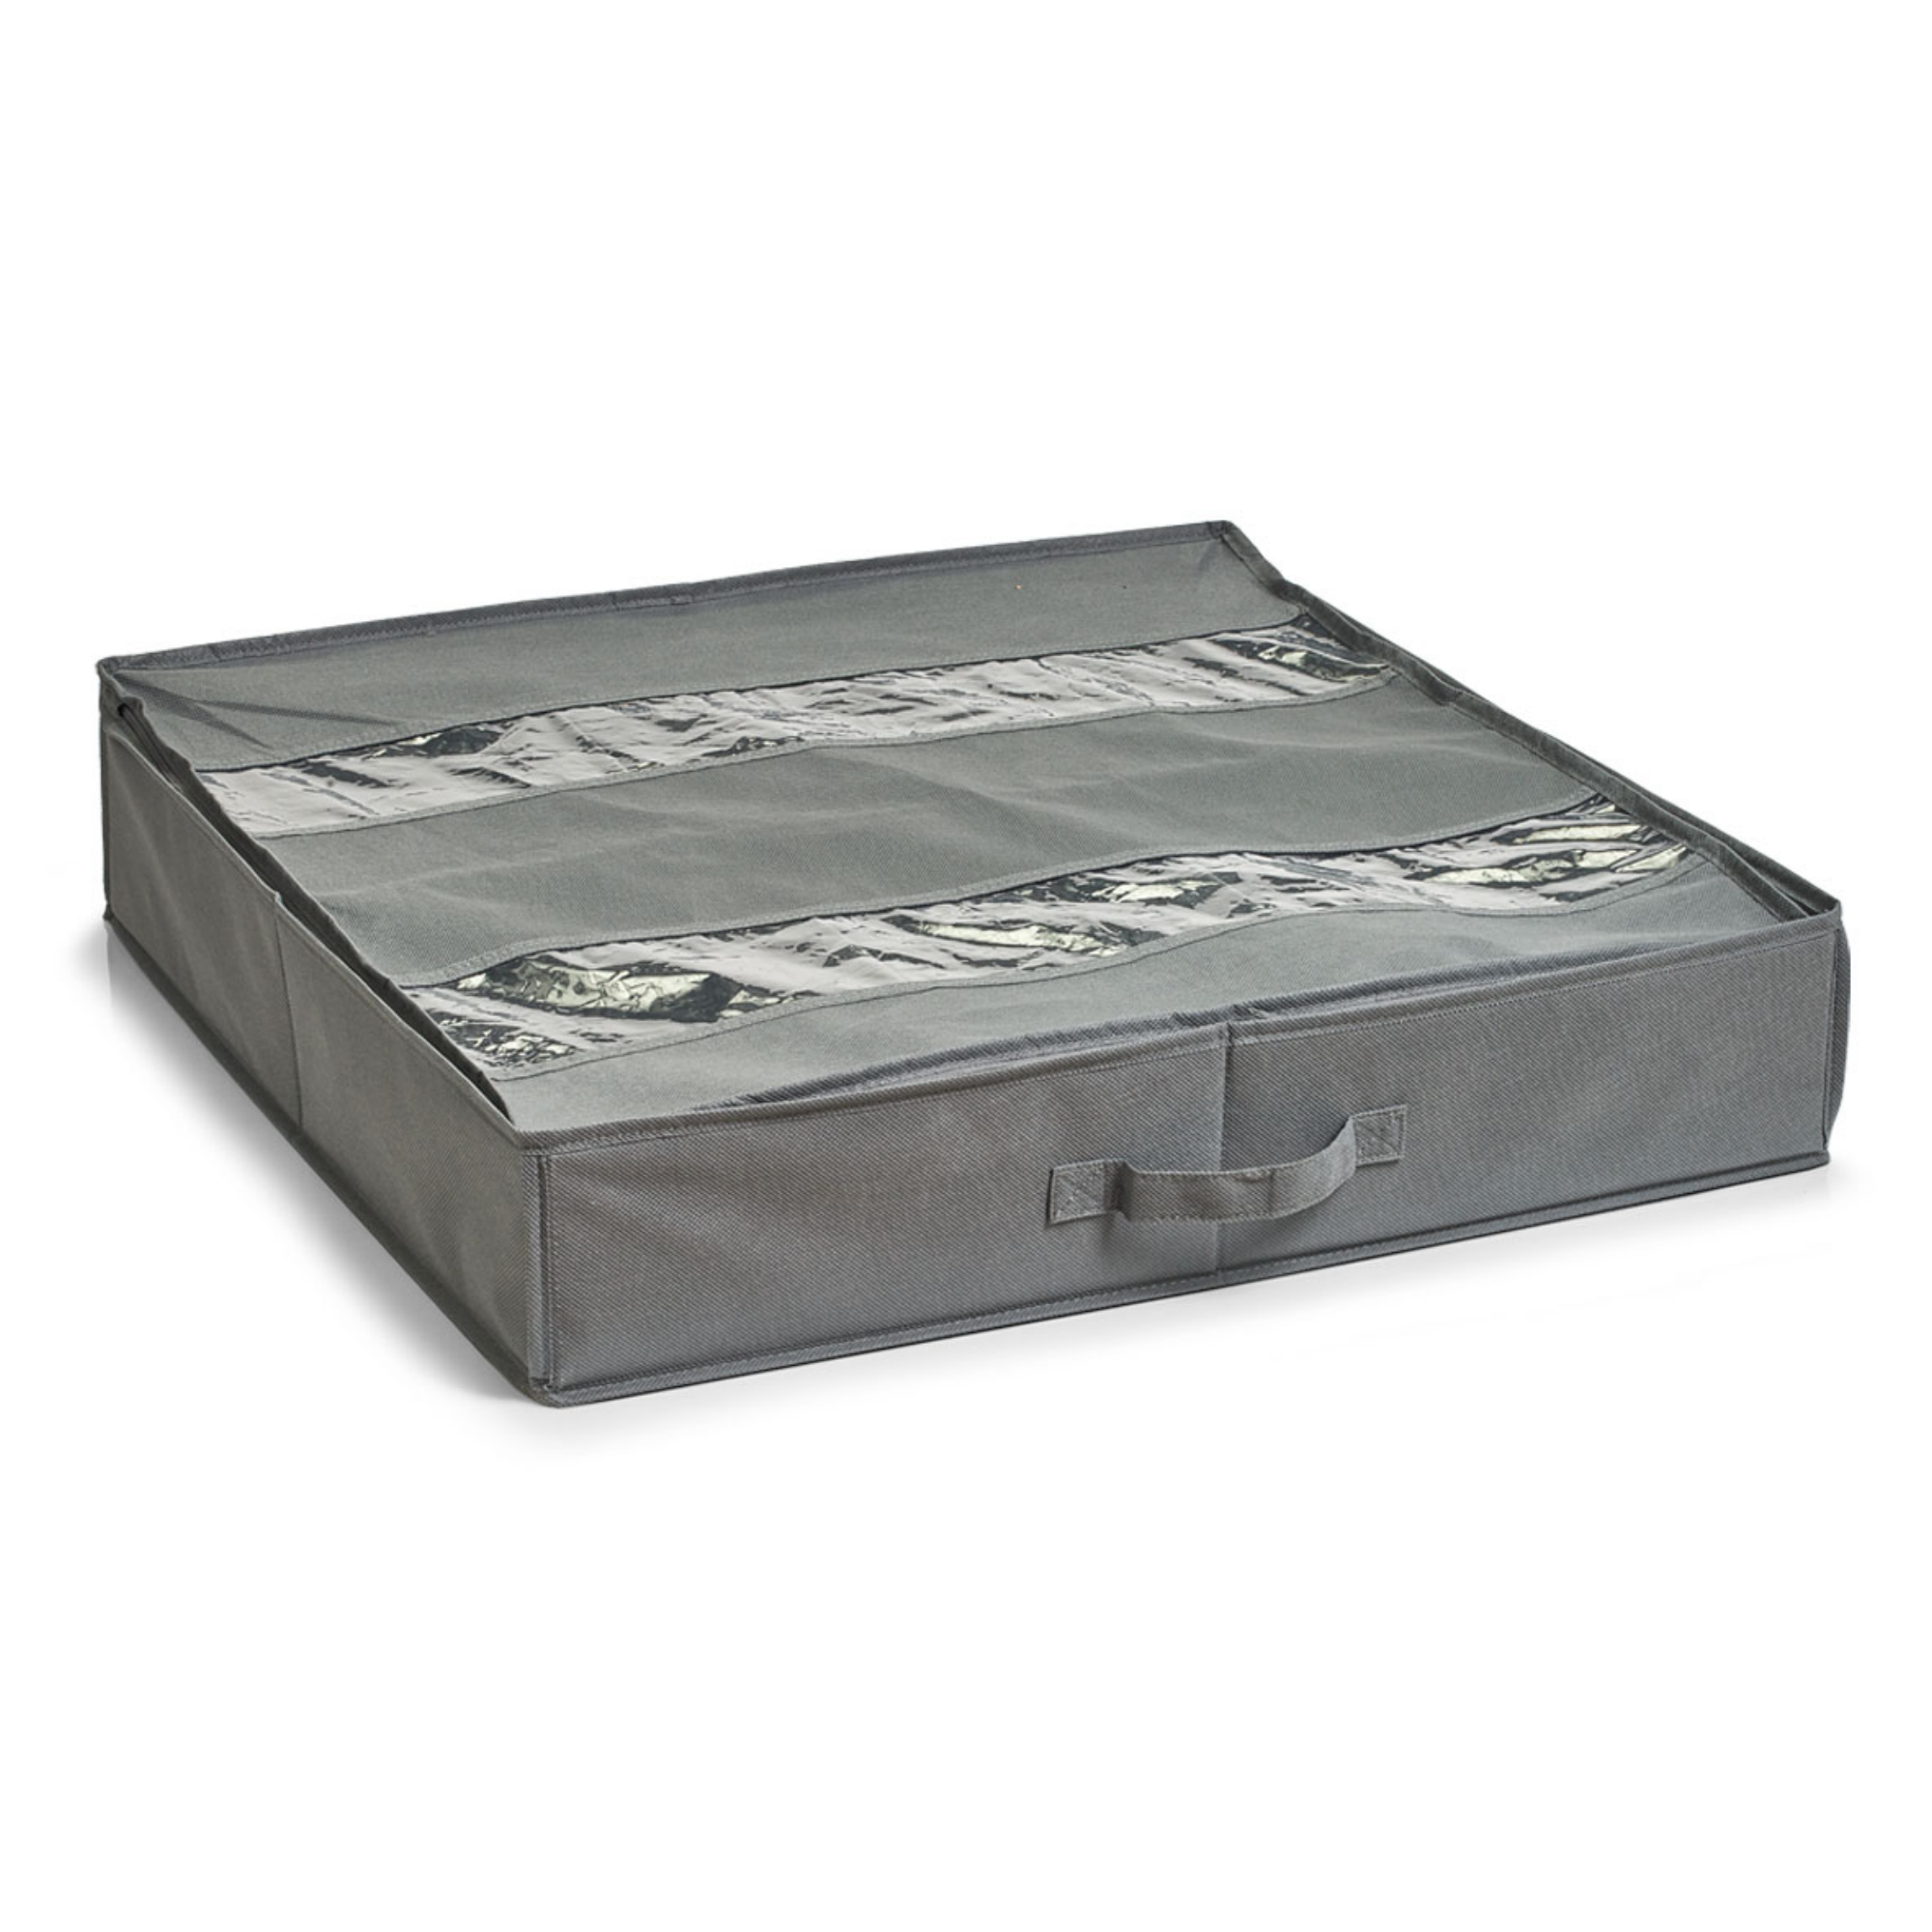 Vlies-Schuhaufbewahrungs- Box grau 60 x 60 x 13 cm + product picture